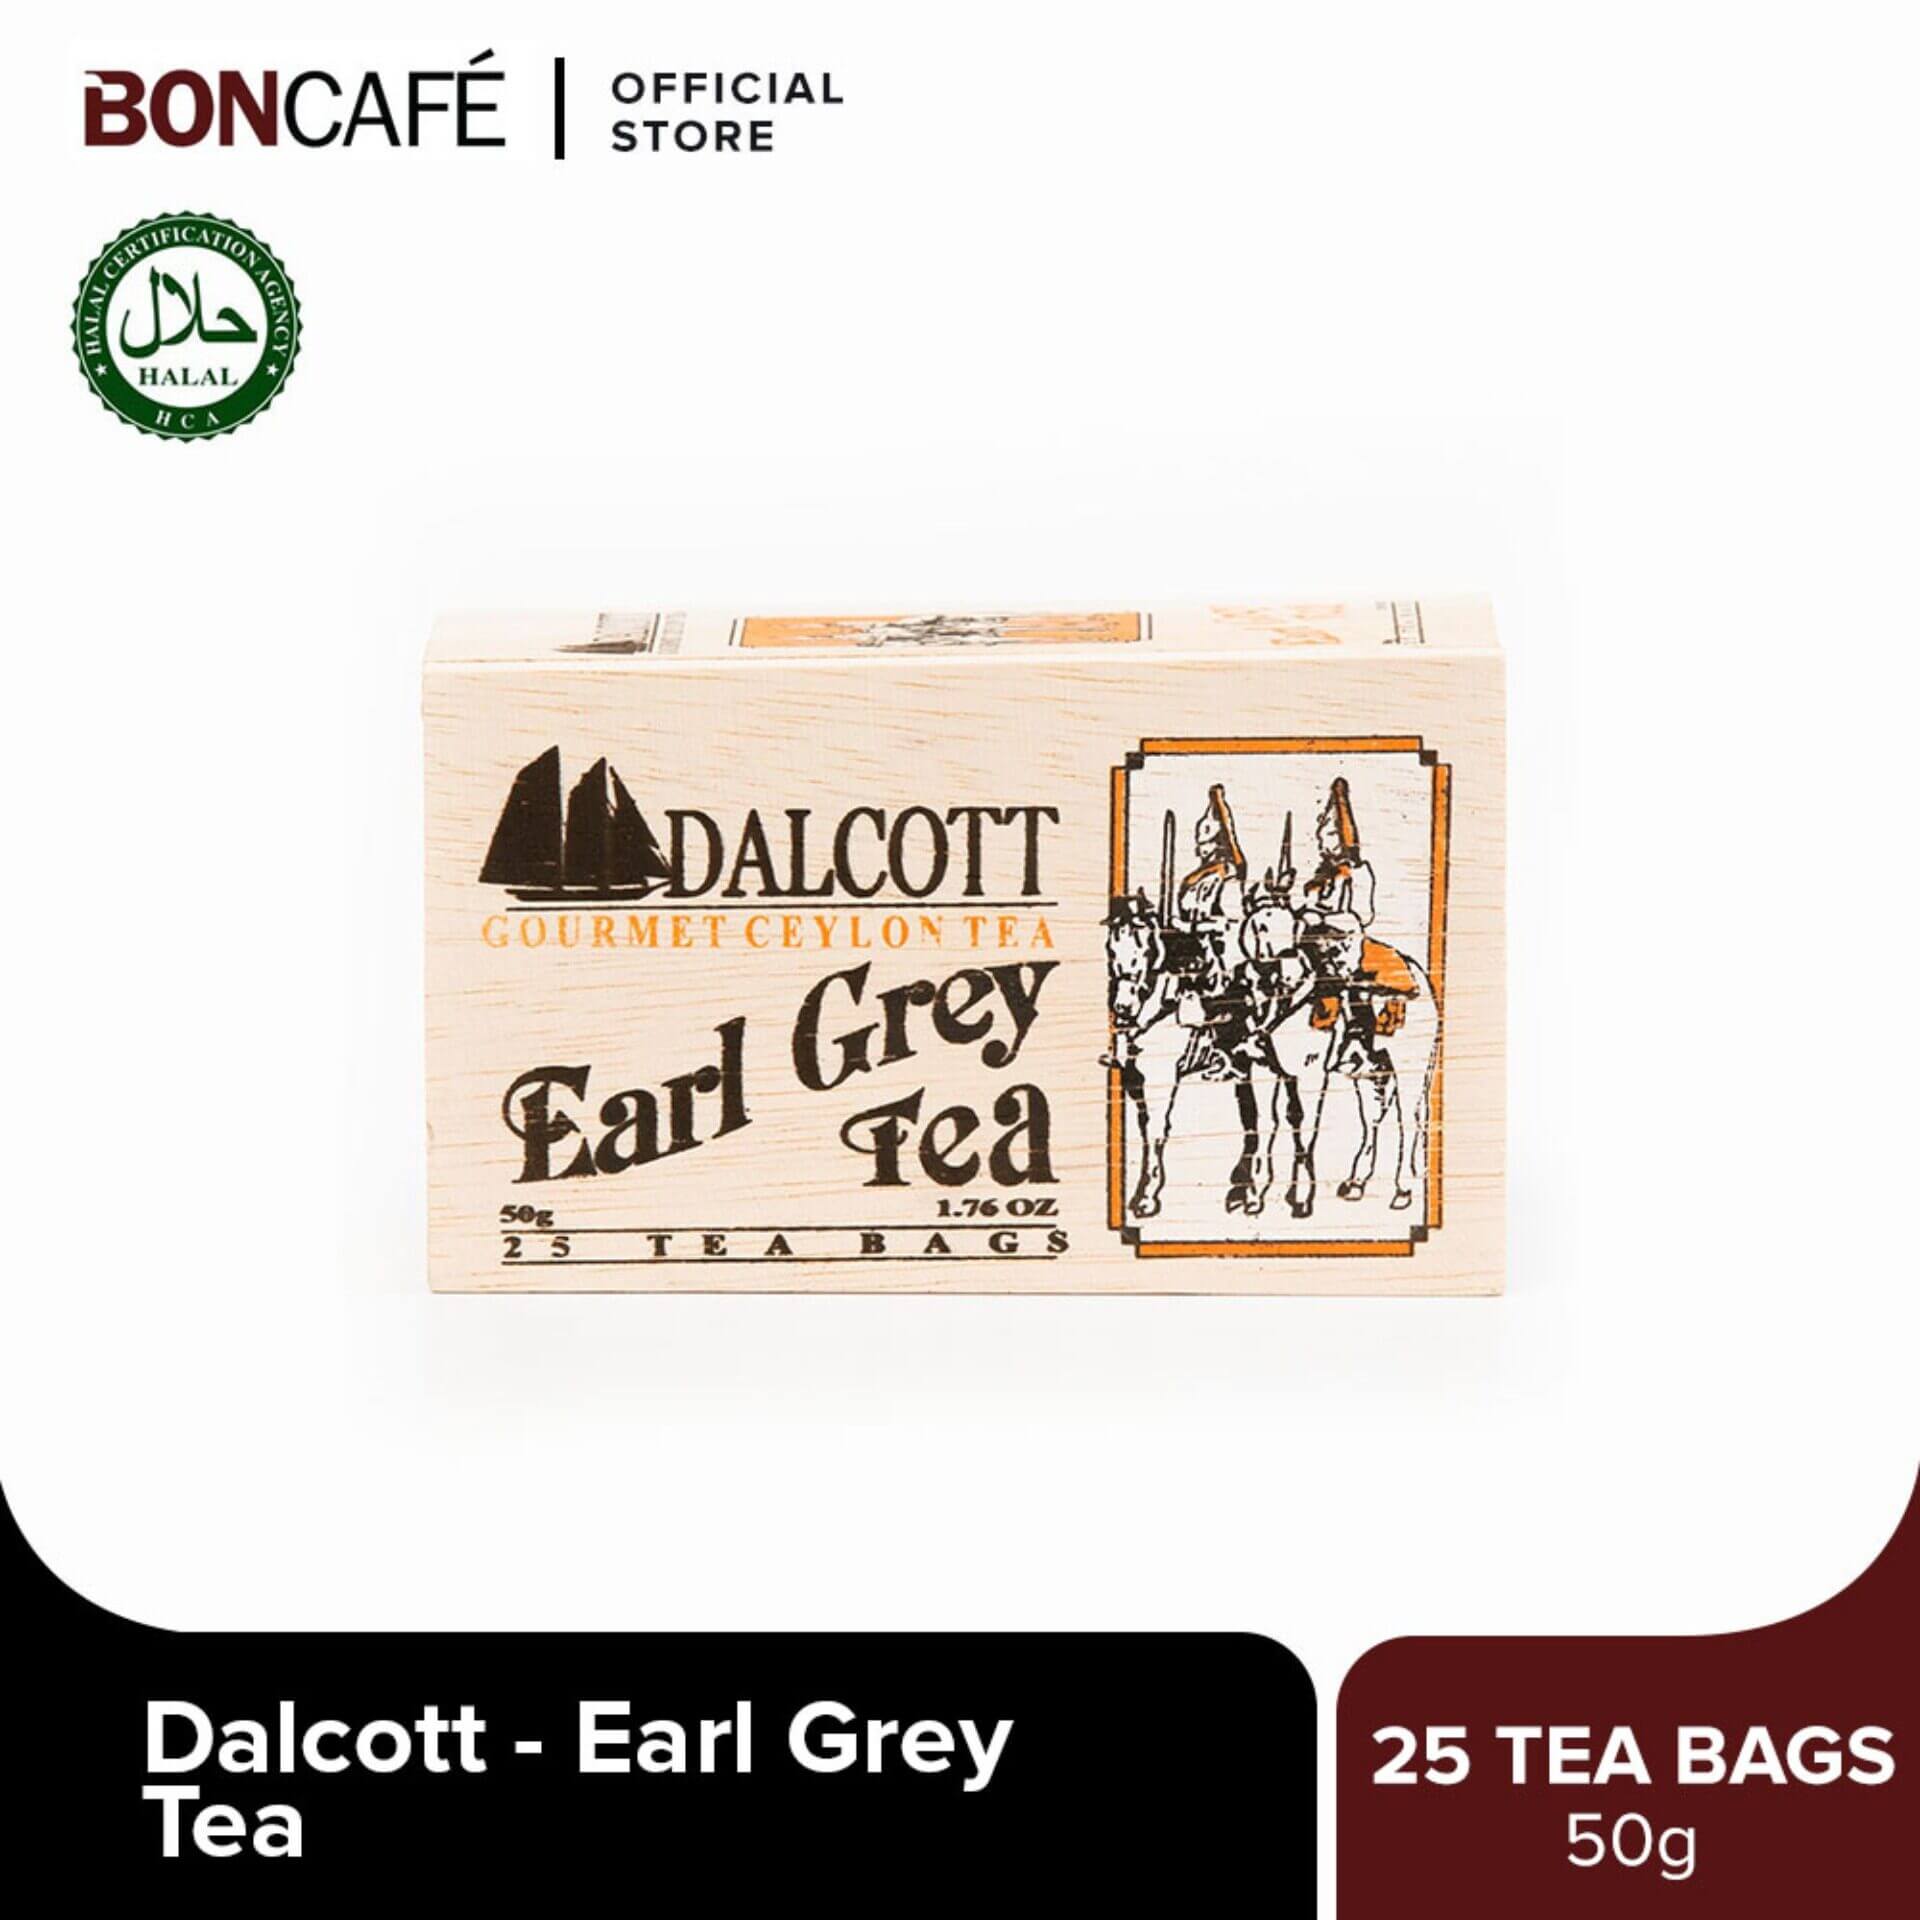 Dalcott Earl Grey Tea